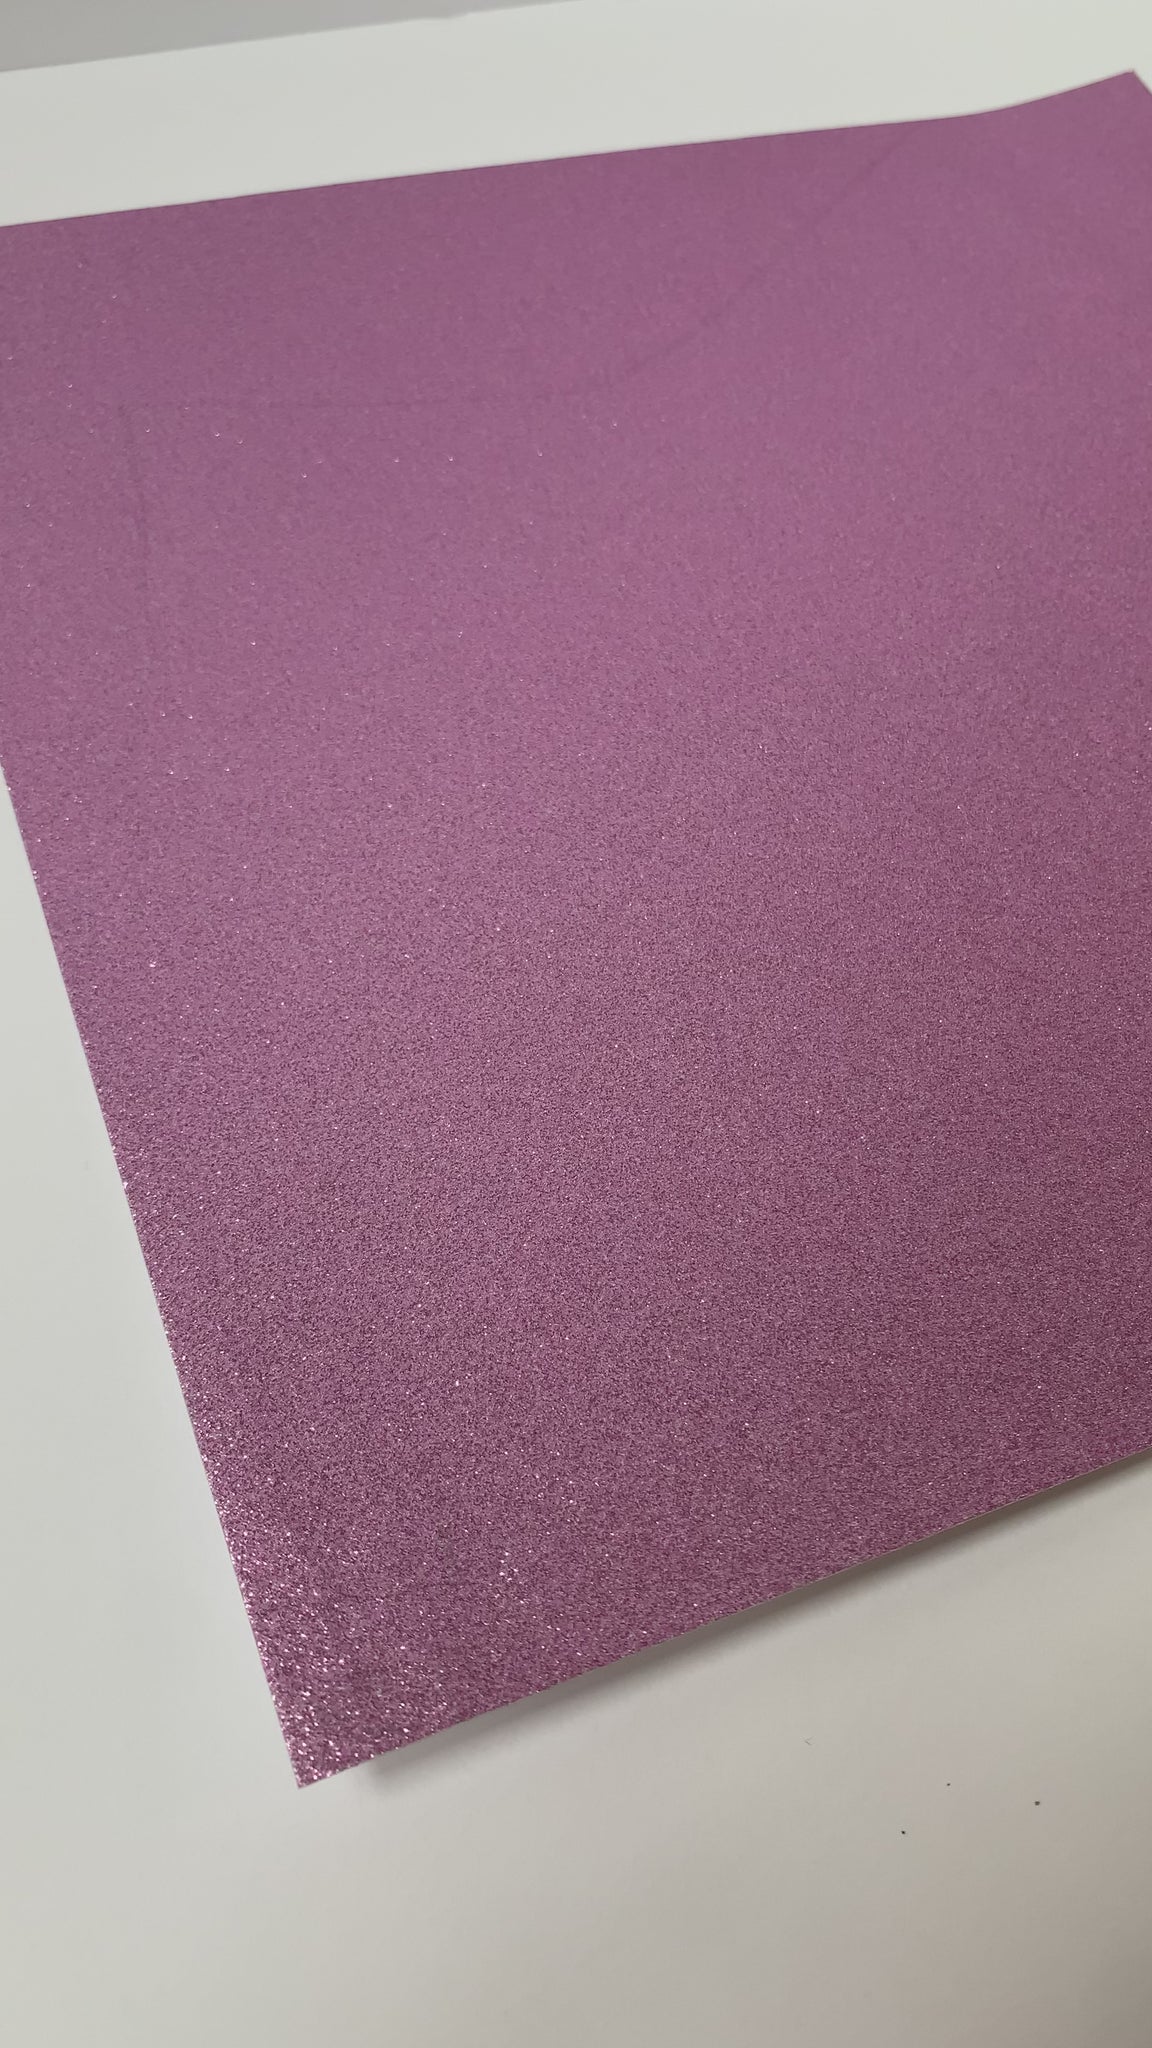 Paper Accents Glitter Cardstock 12x 12 85lb 15pc Purple